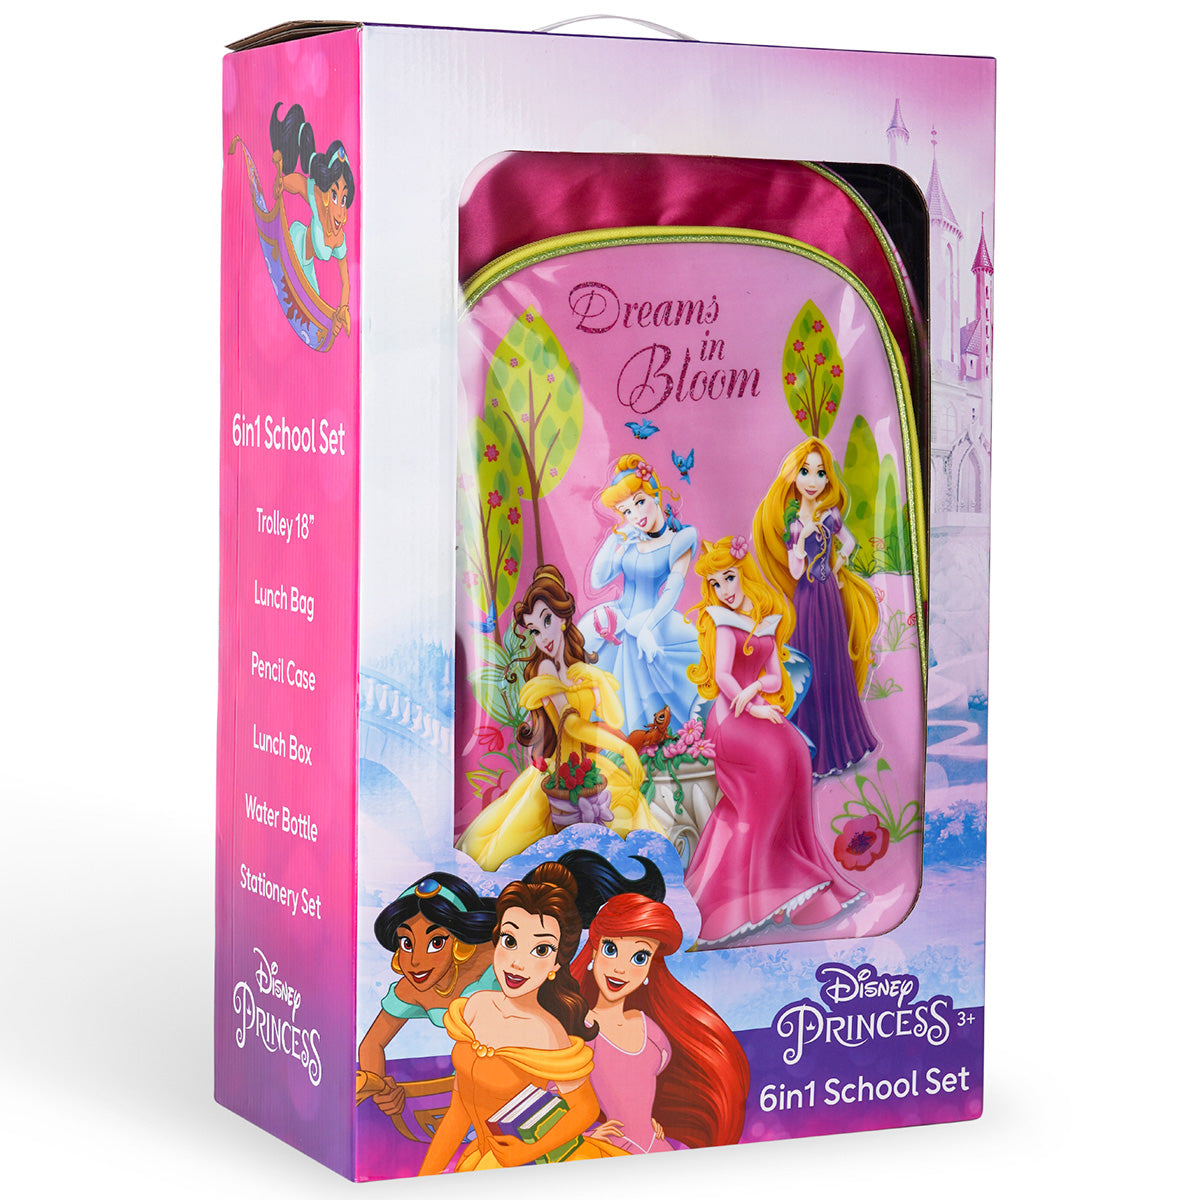 Disney Princess Dreams In Bloom 6in1 Box Set 18"